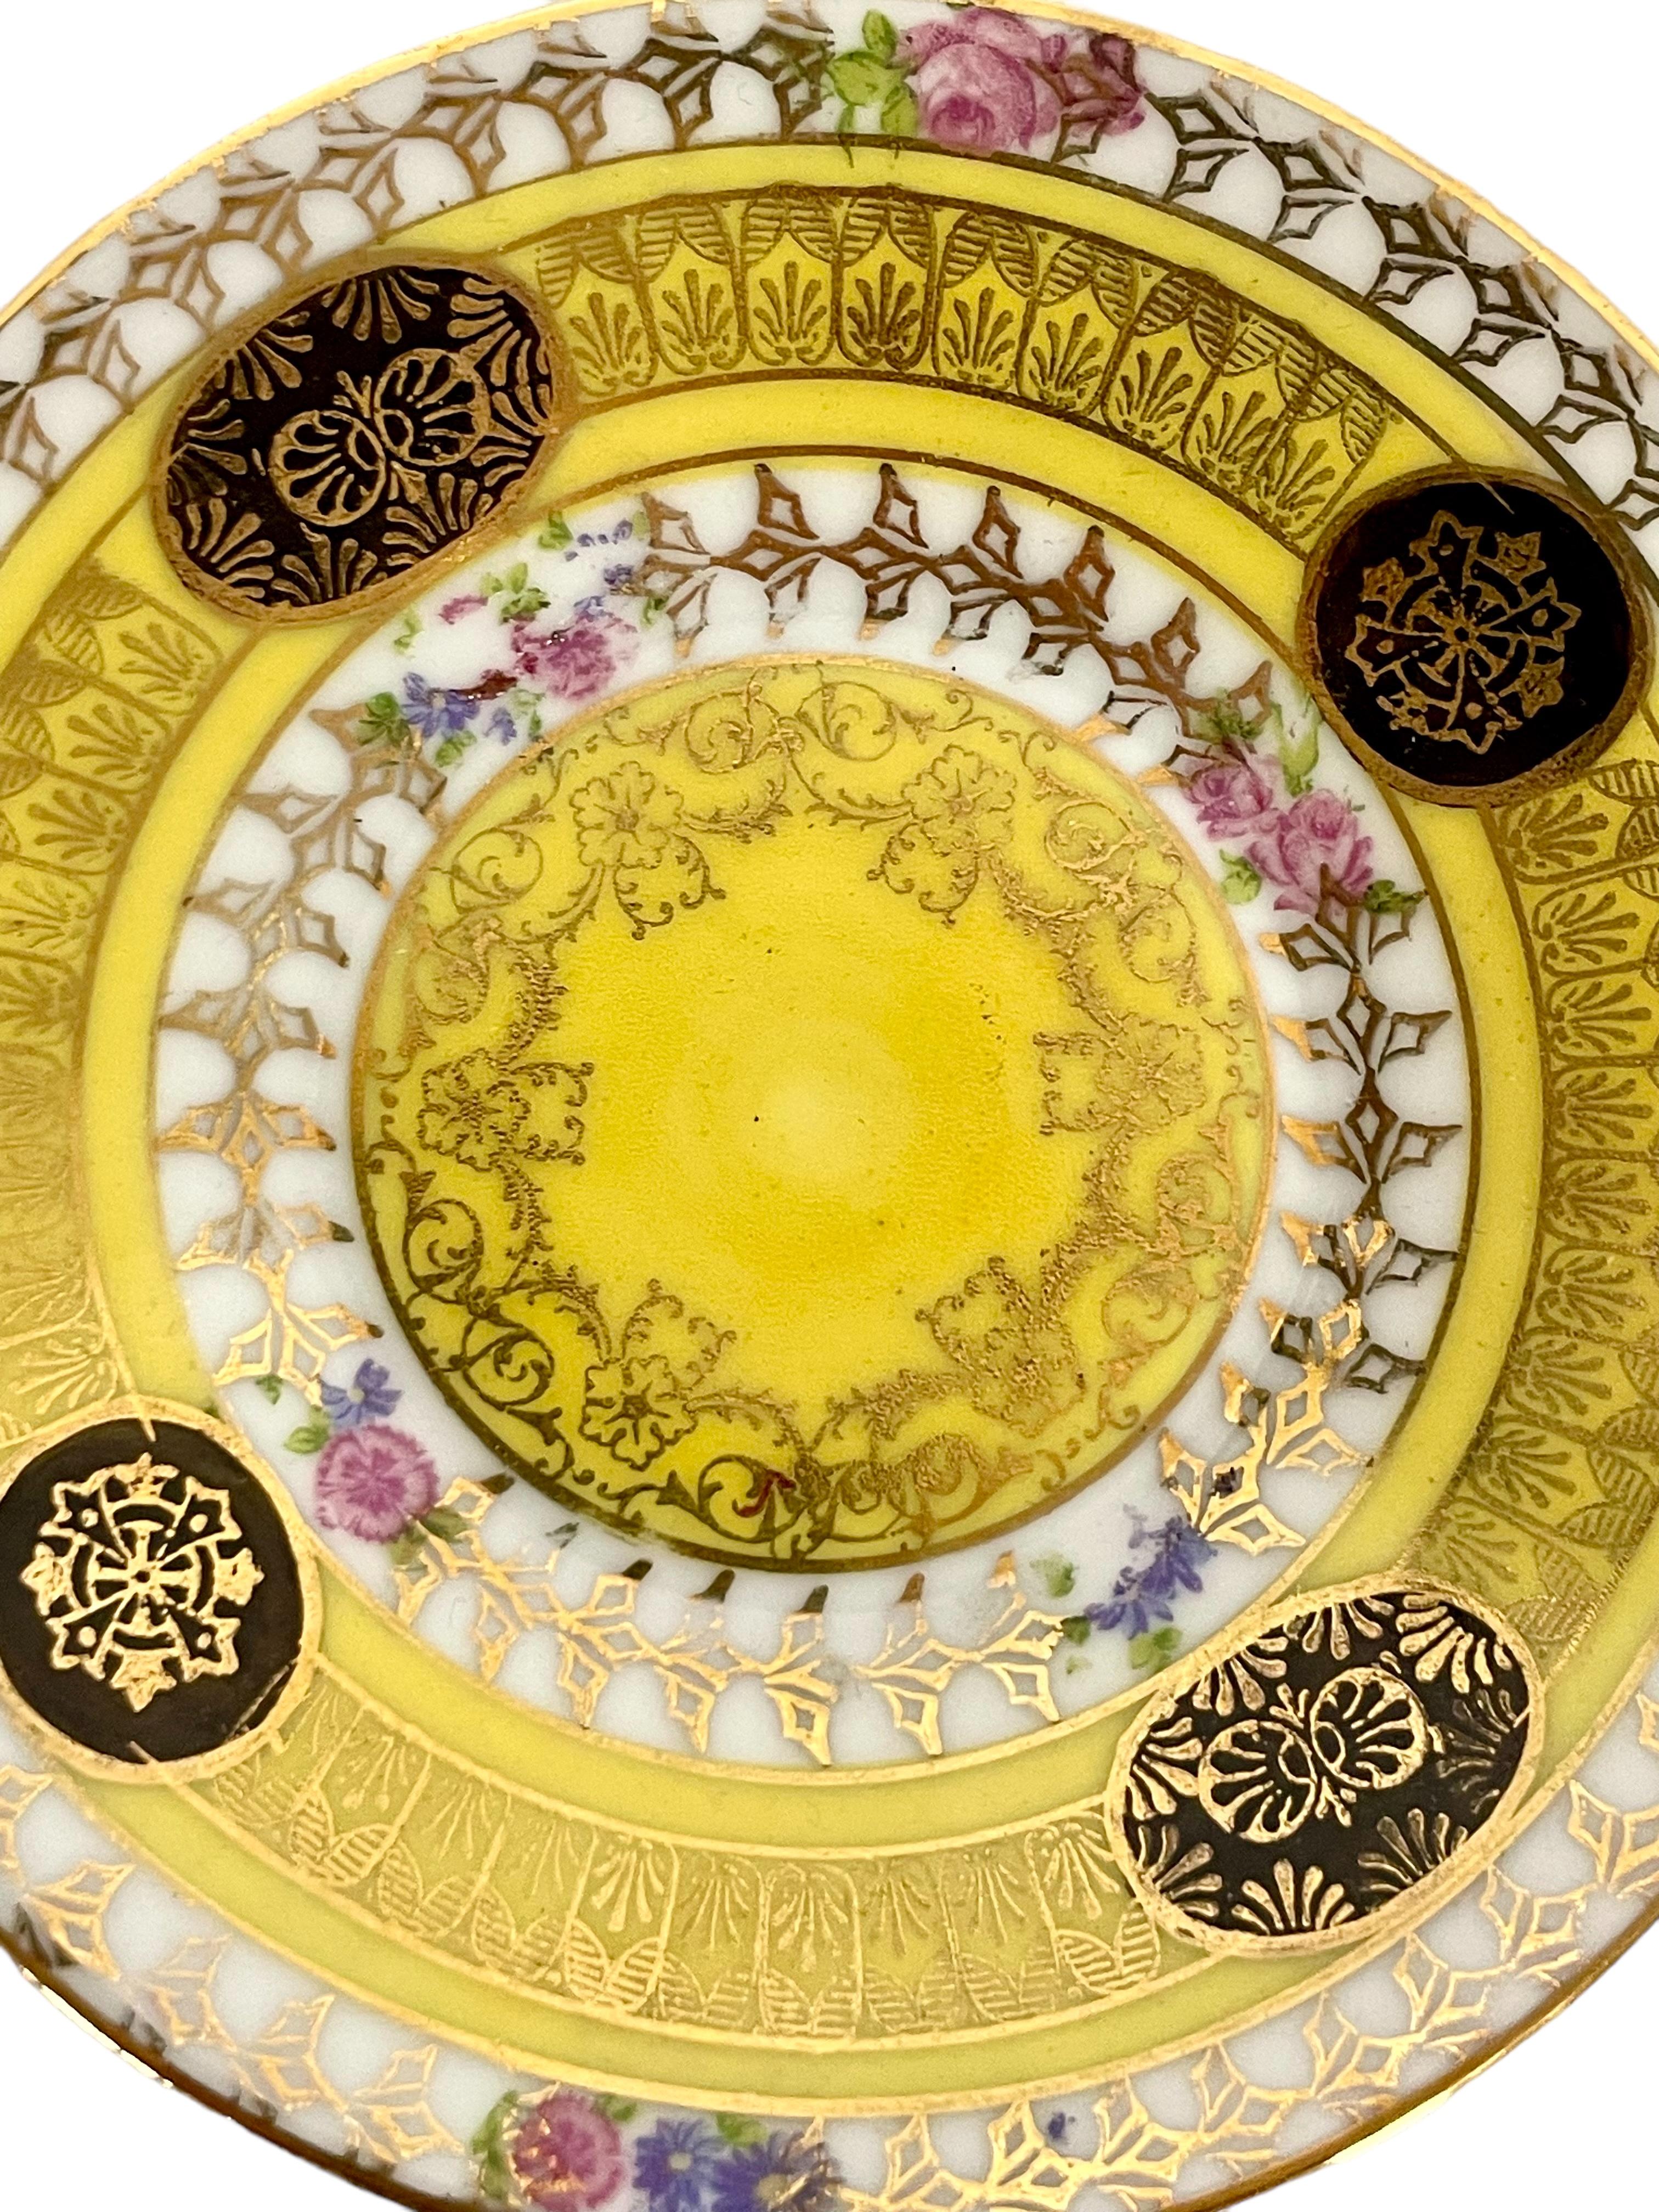 Paris Porcelain Teacup and Saucer Depicting Empress Josephine For Sale 3